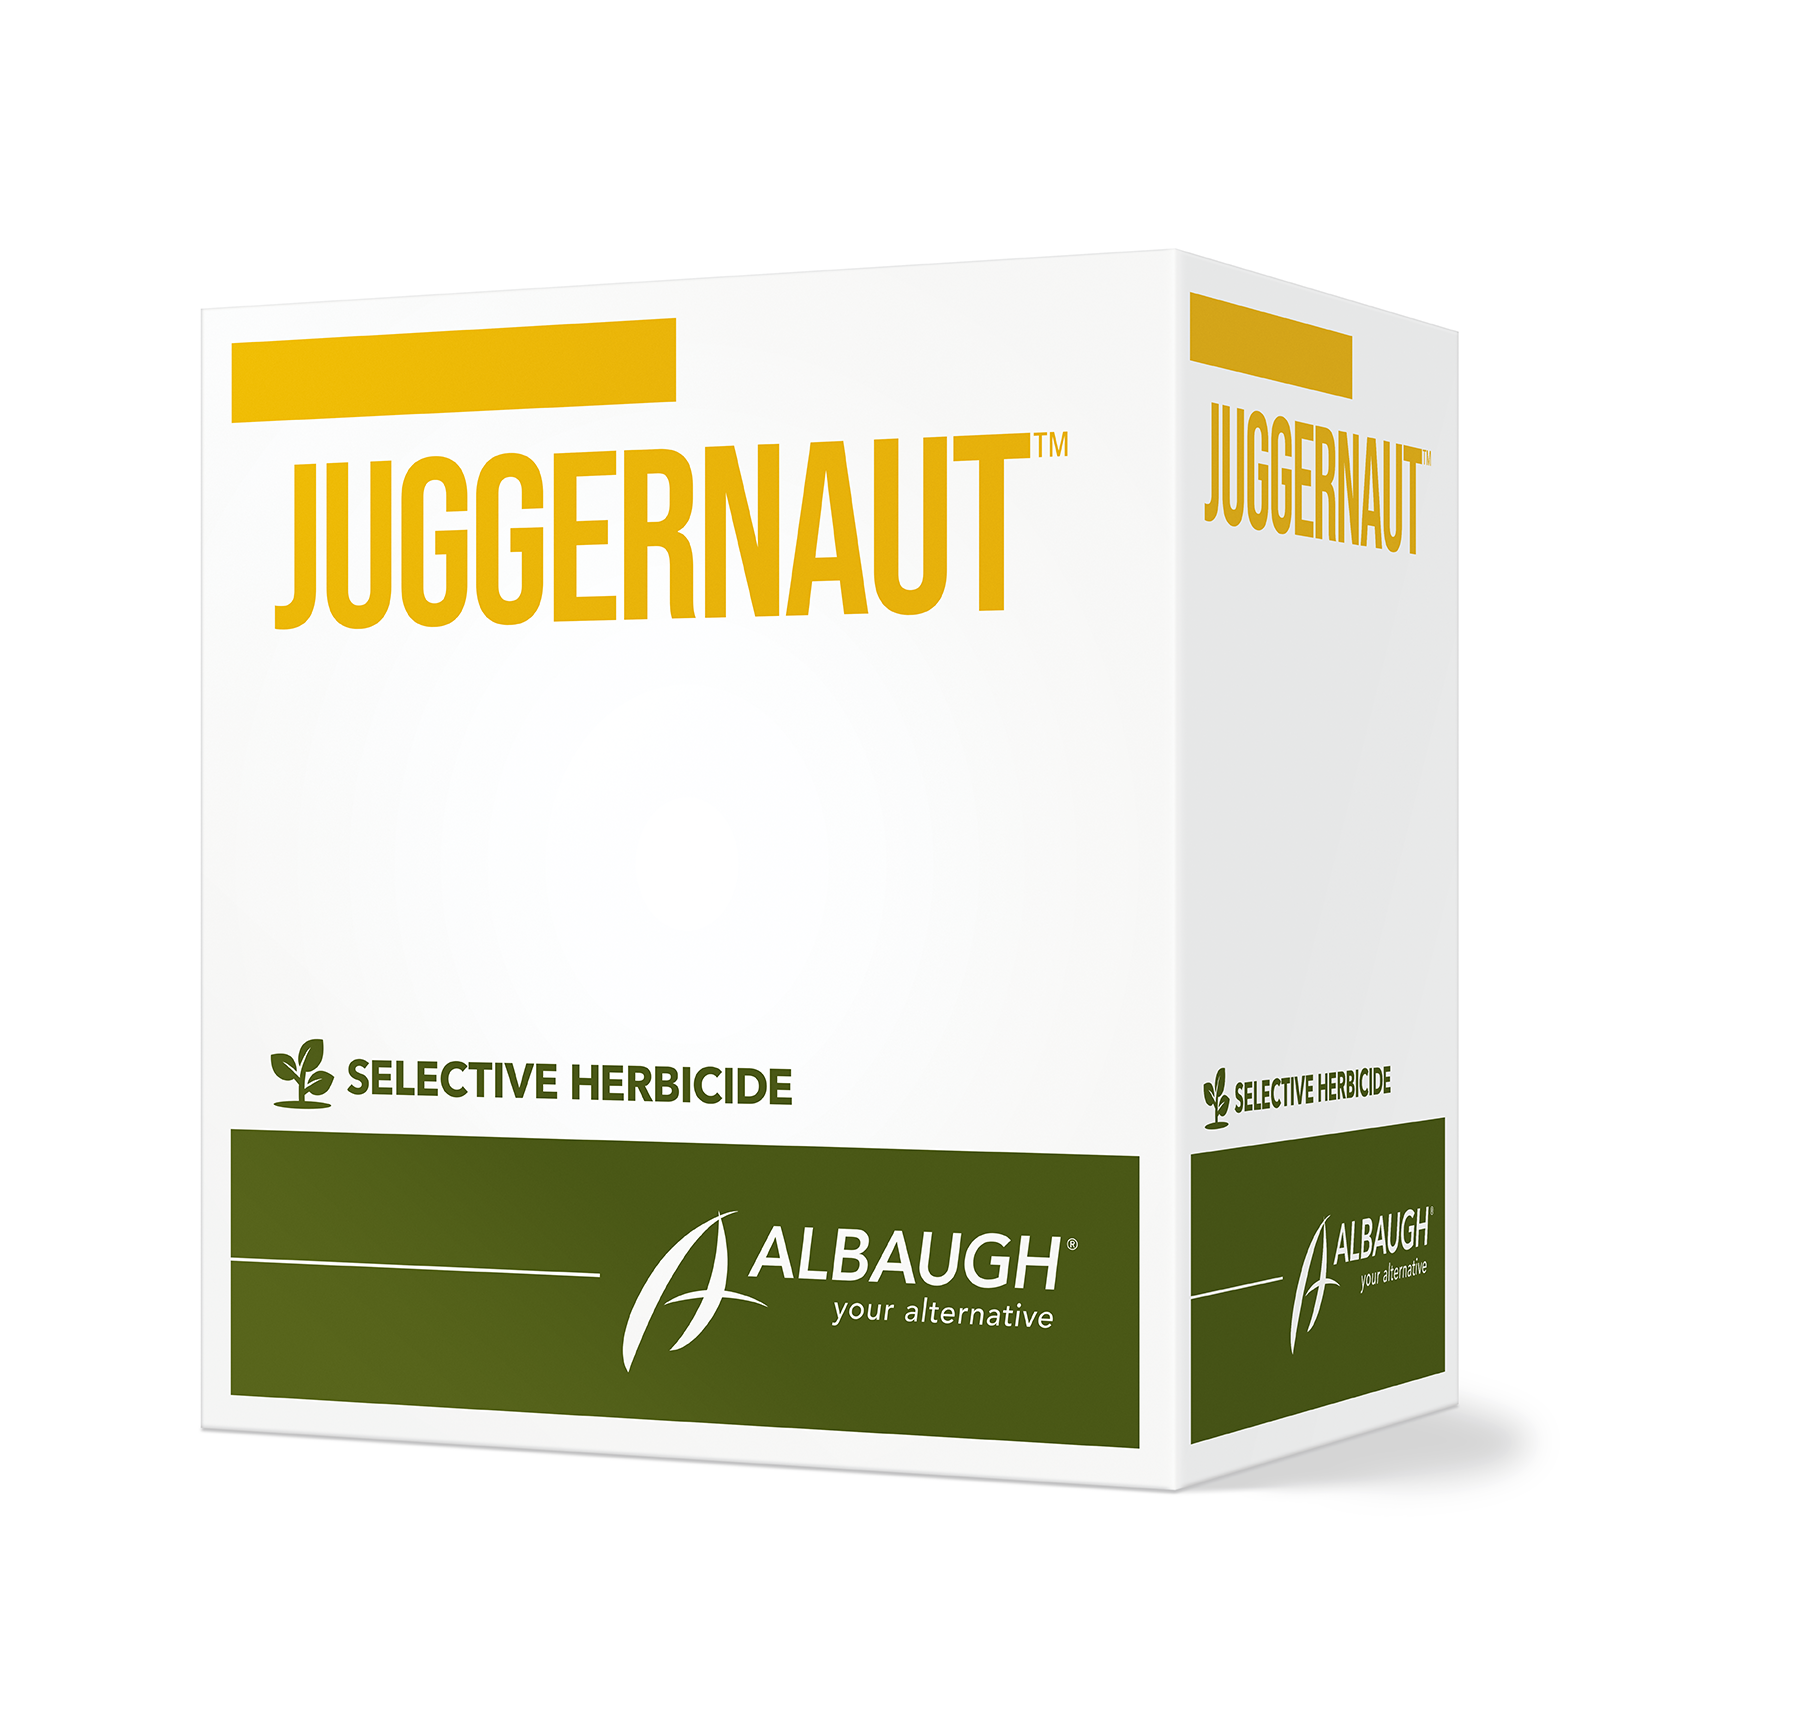 Juggernaut™